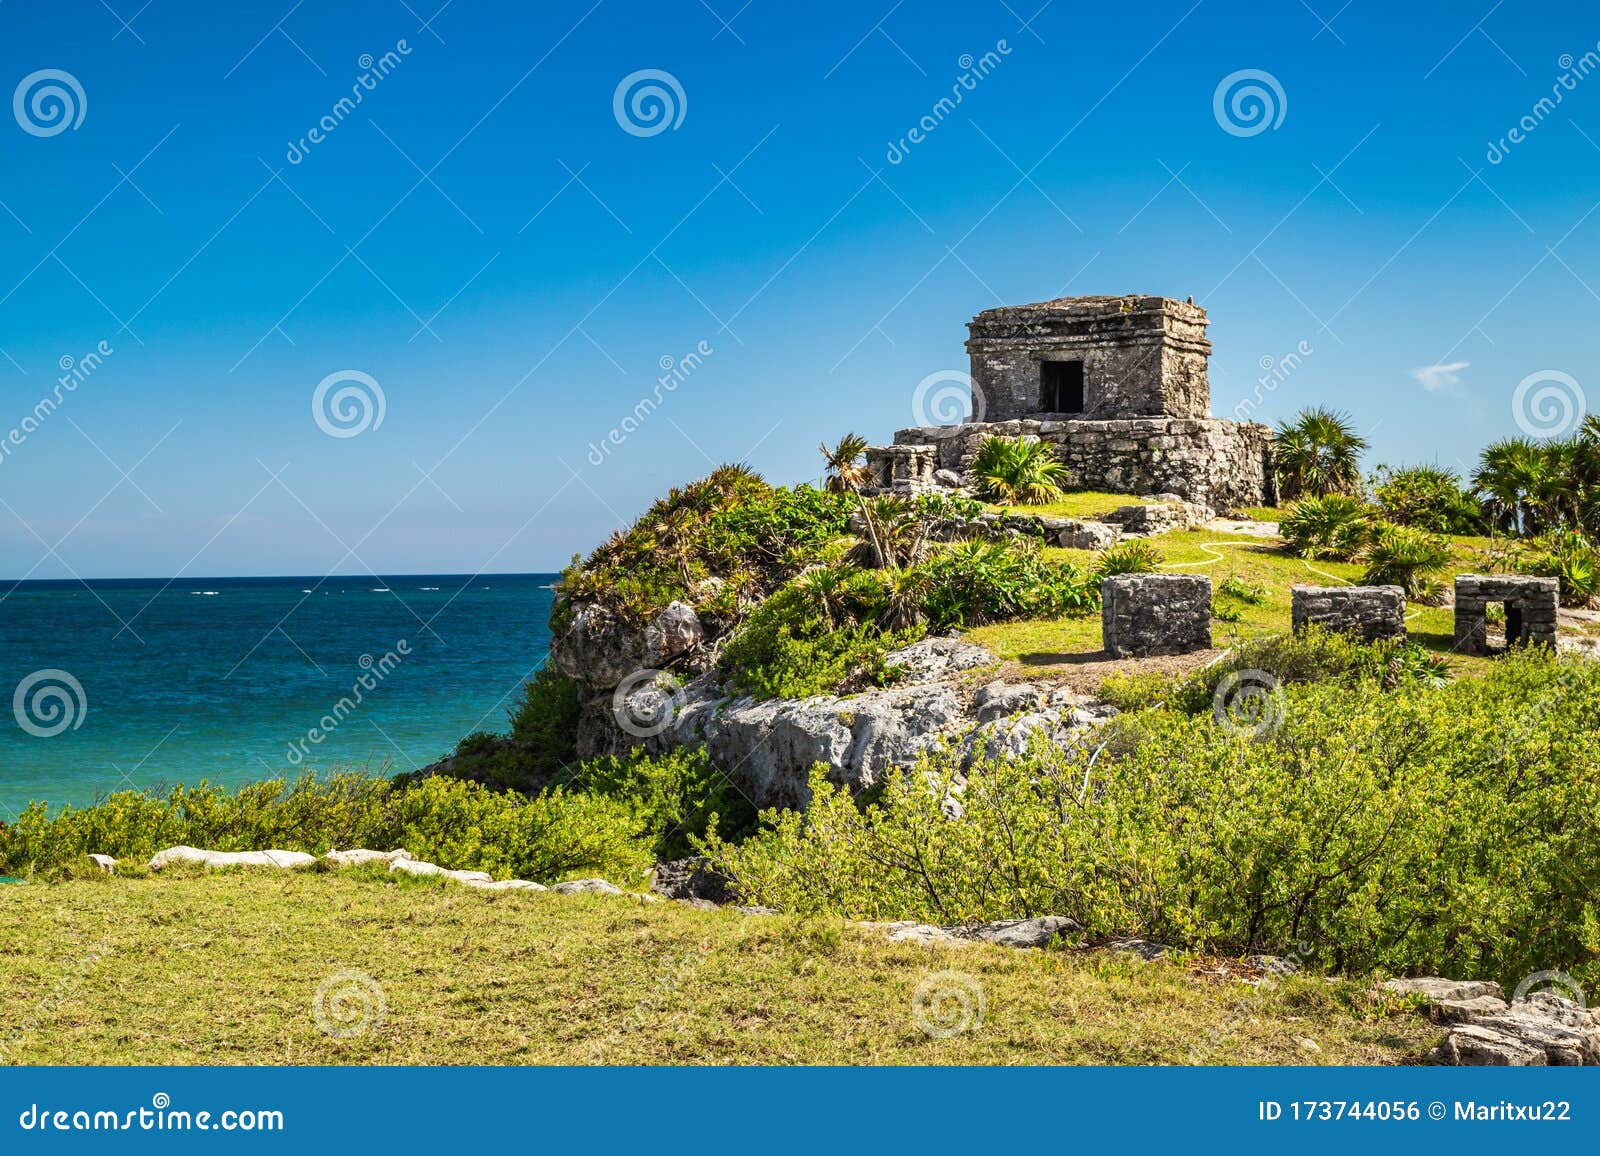 Tulum Ruins At The Caribbean Coast Quintana Roo Mexico Stock Photo Image Of Ocean Deep 173744056